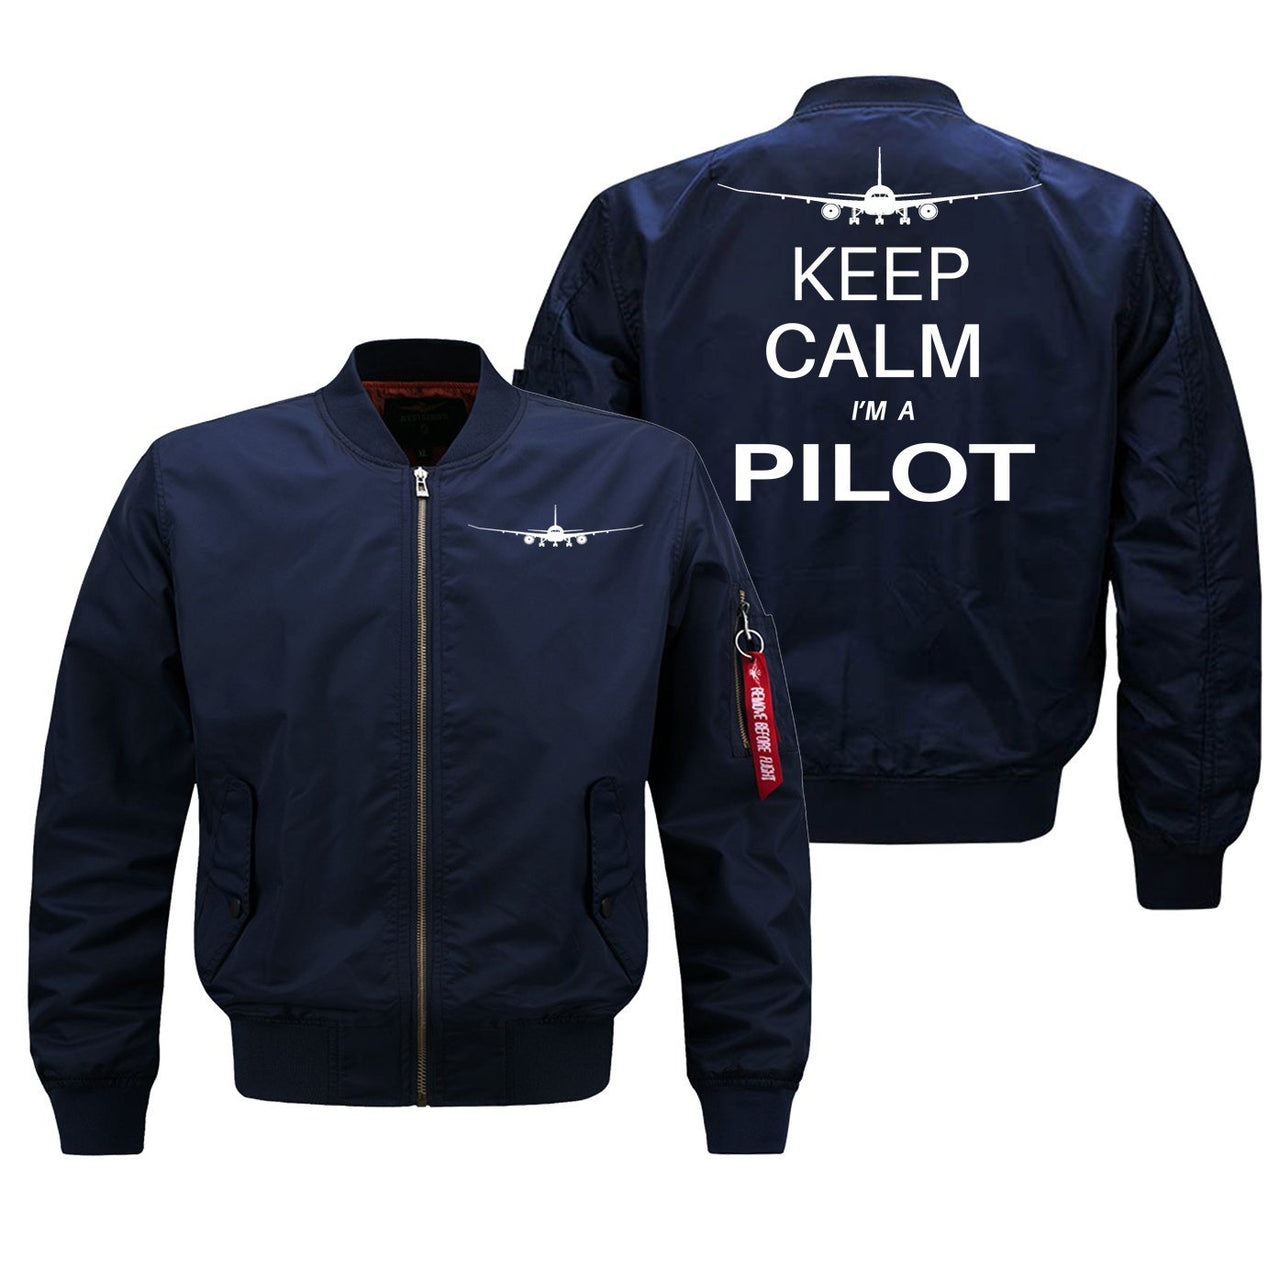 Keep Calm I'm a Pilot Designed Pilot Jackets (Customizable) Pilot Eyes Store Blue (Thin) M (US XS) 